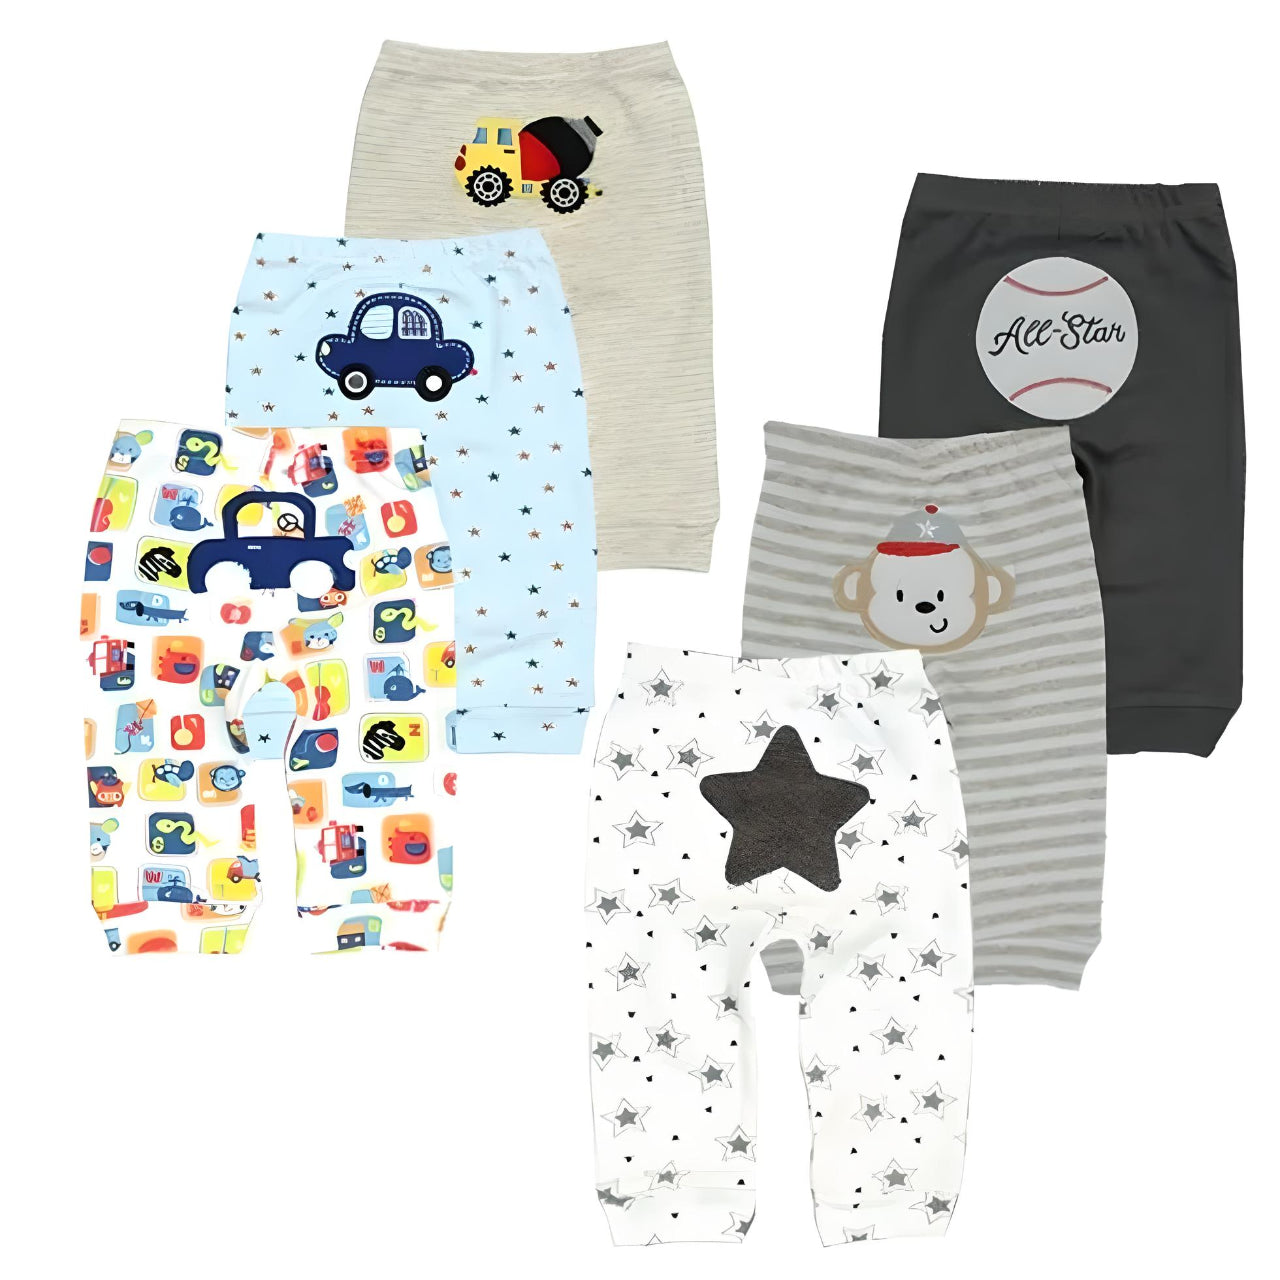 Babbez 6-Piece Baby Boy Bodysuit Set: Long Sleeve Cartoon Print Outfits (0-24 Months)